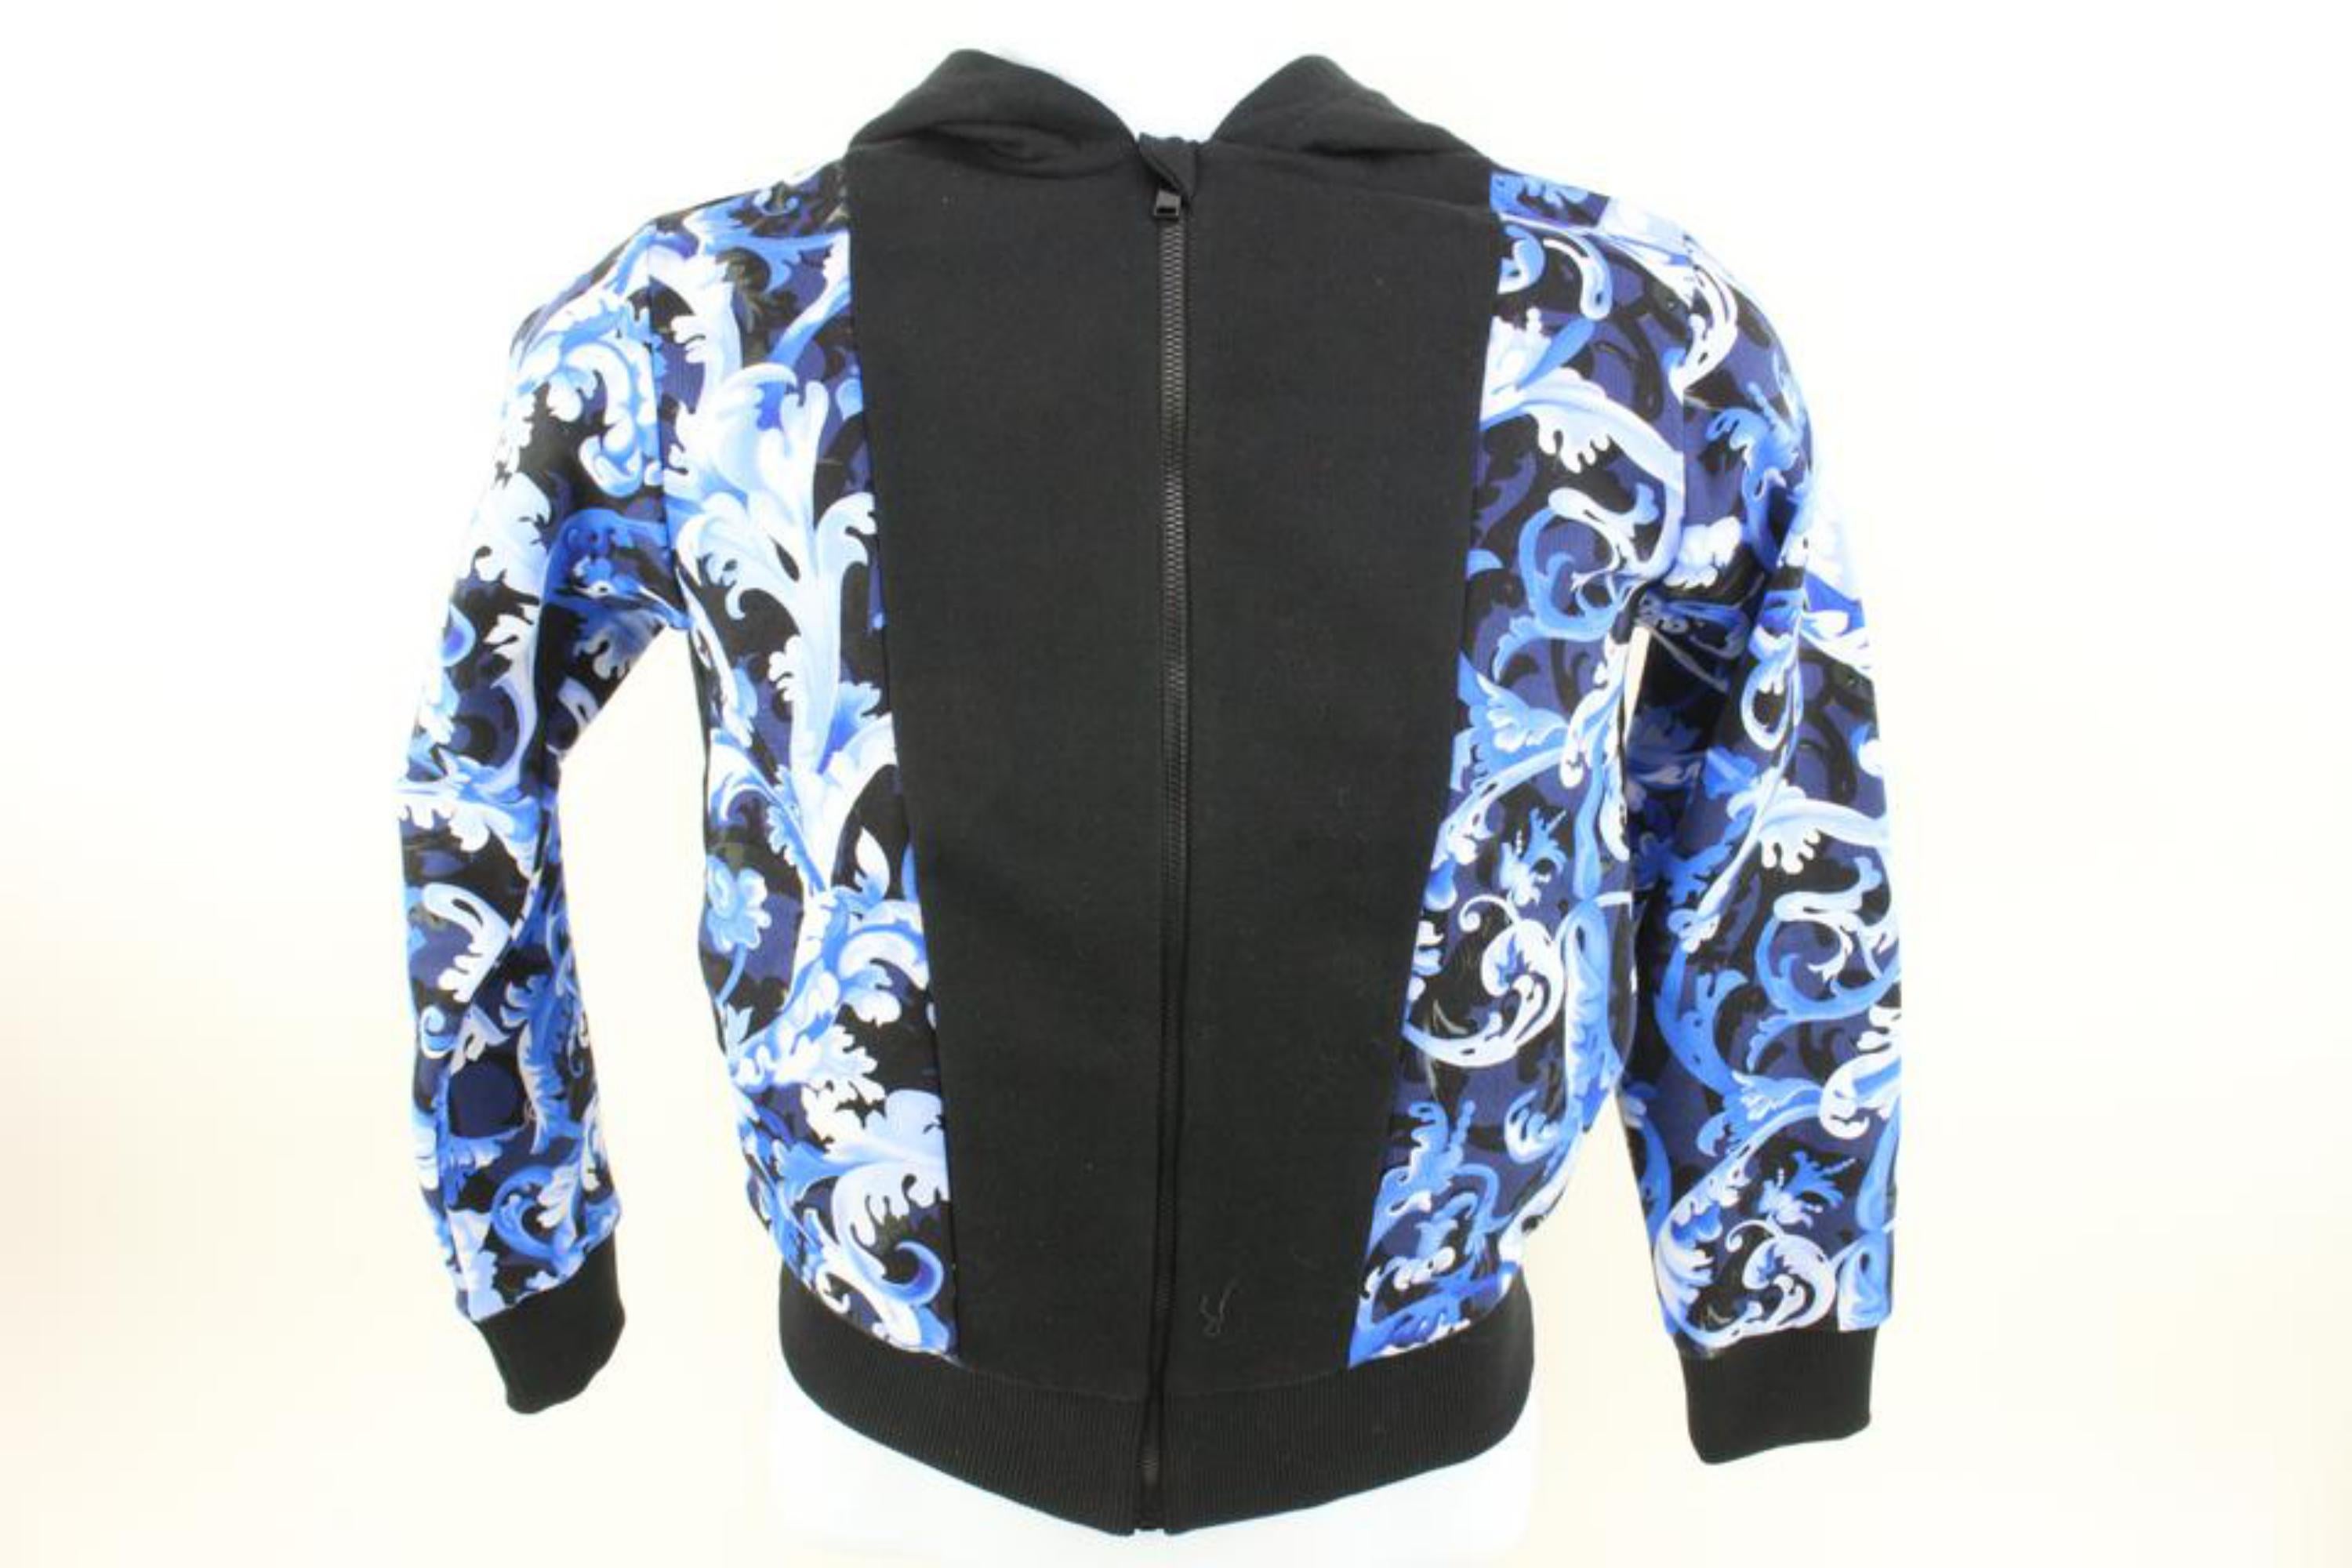 Versace Size 8A Boy's Black Blue Baroque Zip Up Hoodie Sweatshirt Kids 125v26
Date Code/Serial Number: 0461B412F66B80
Made In: Italy
Measurements: Length:  15.5